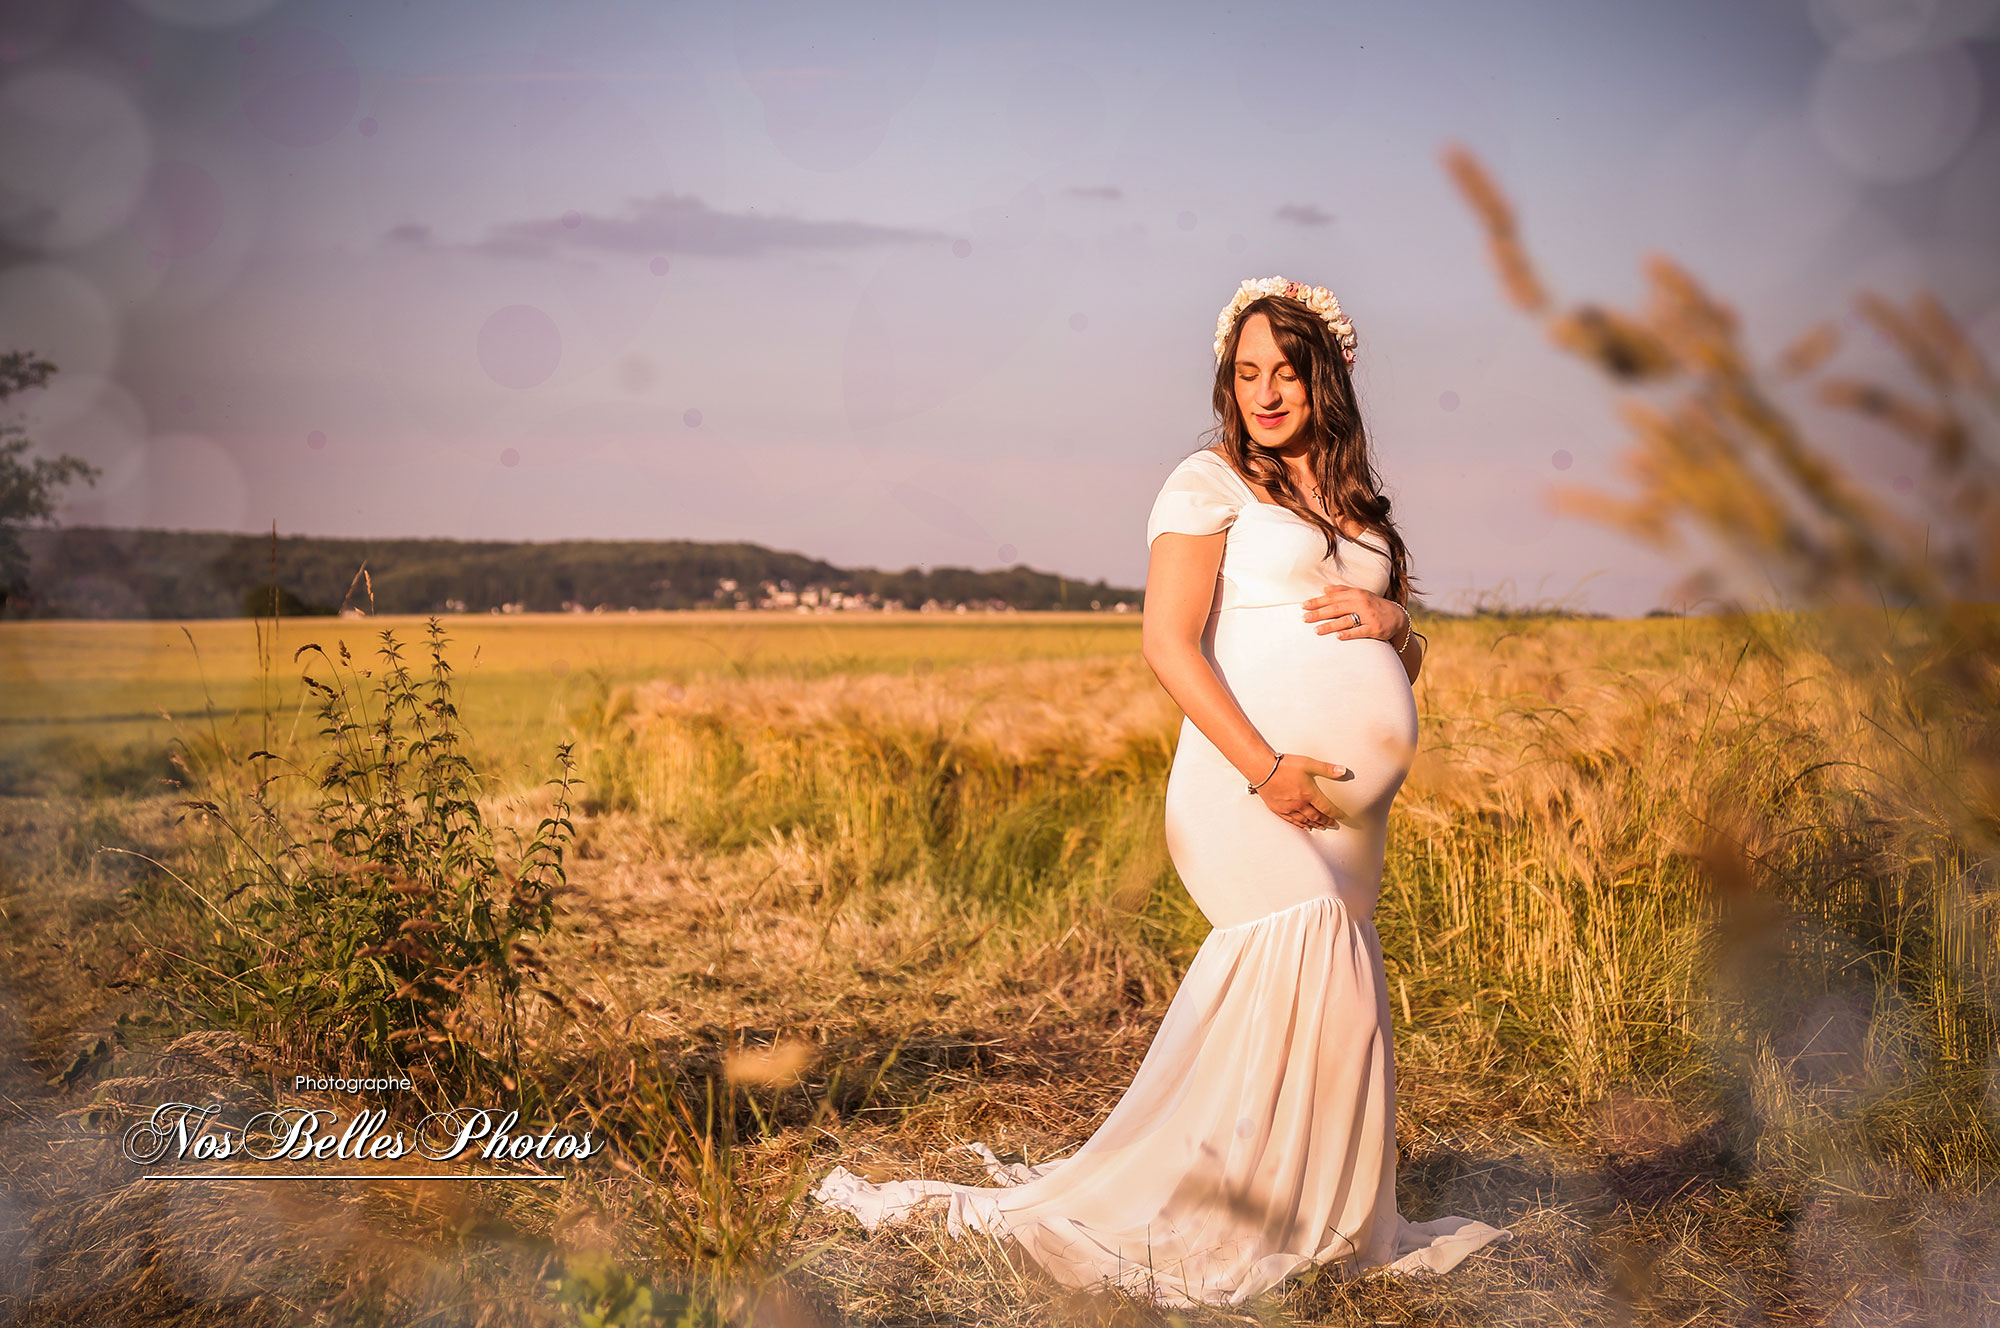 Photographe grossesse Hardricourt Yvelines, shooting photo grossesse, future maman, femme enceinte en extérieur Hardricourt